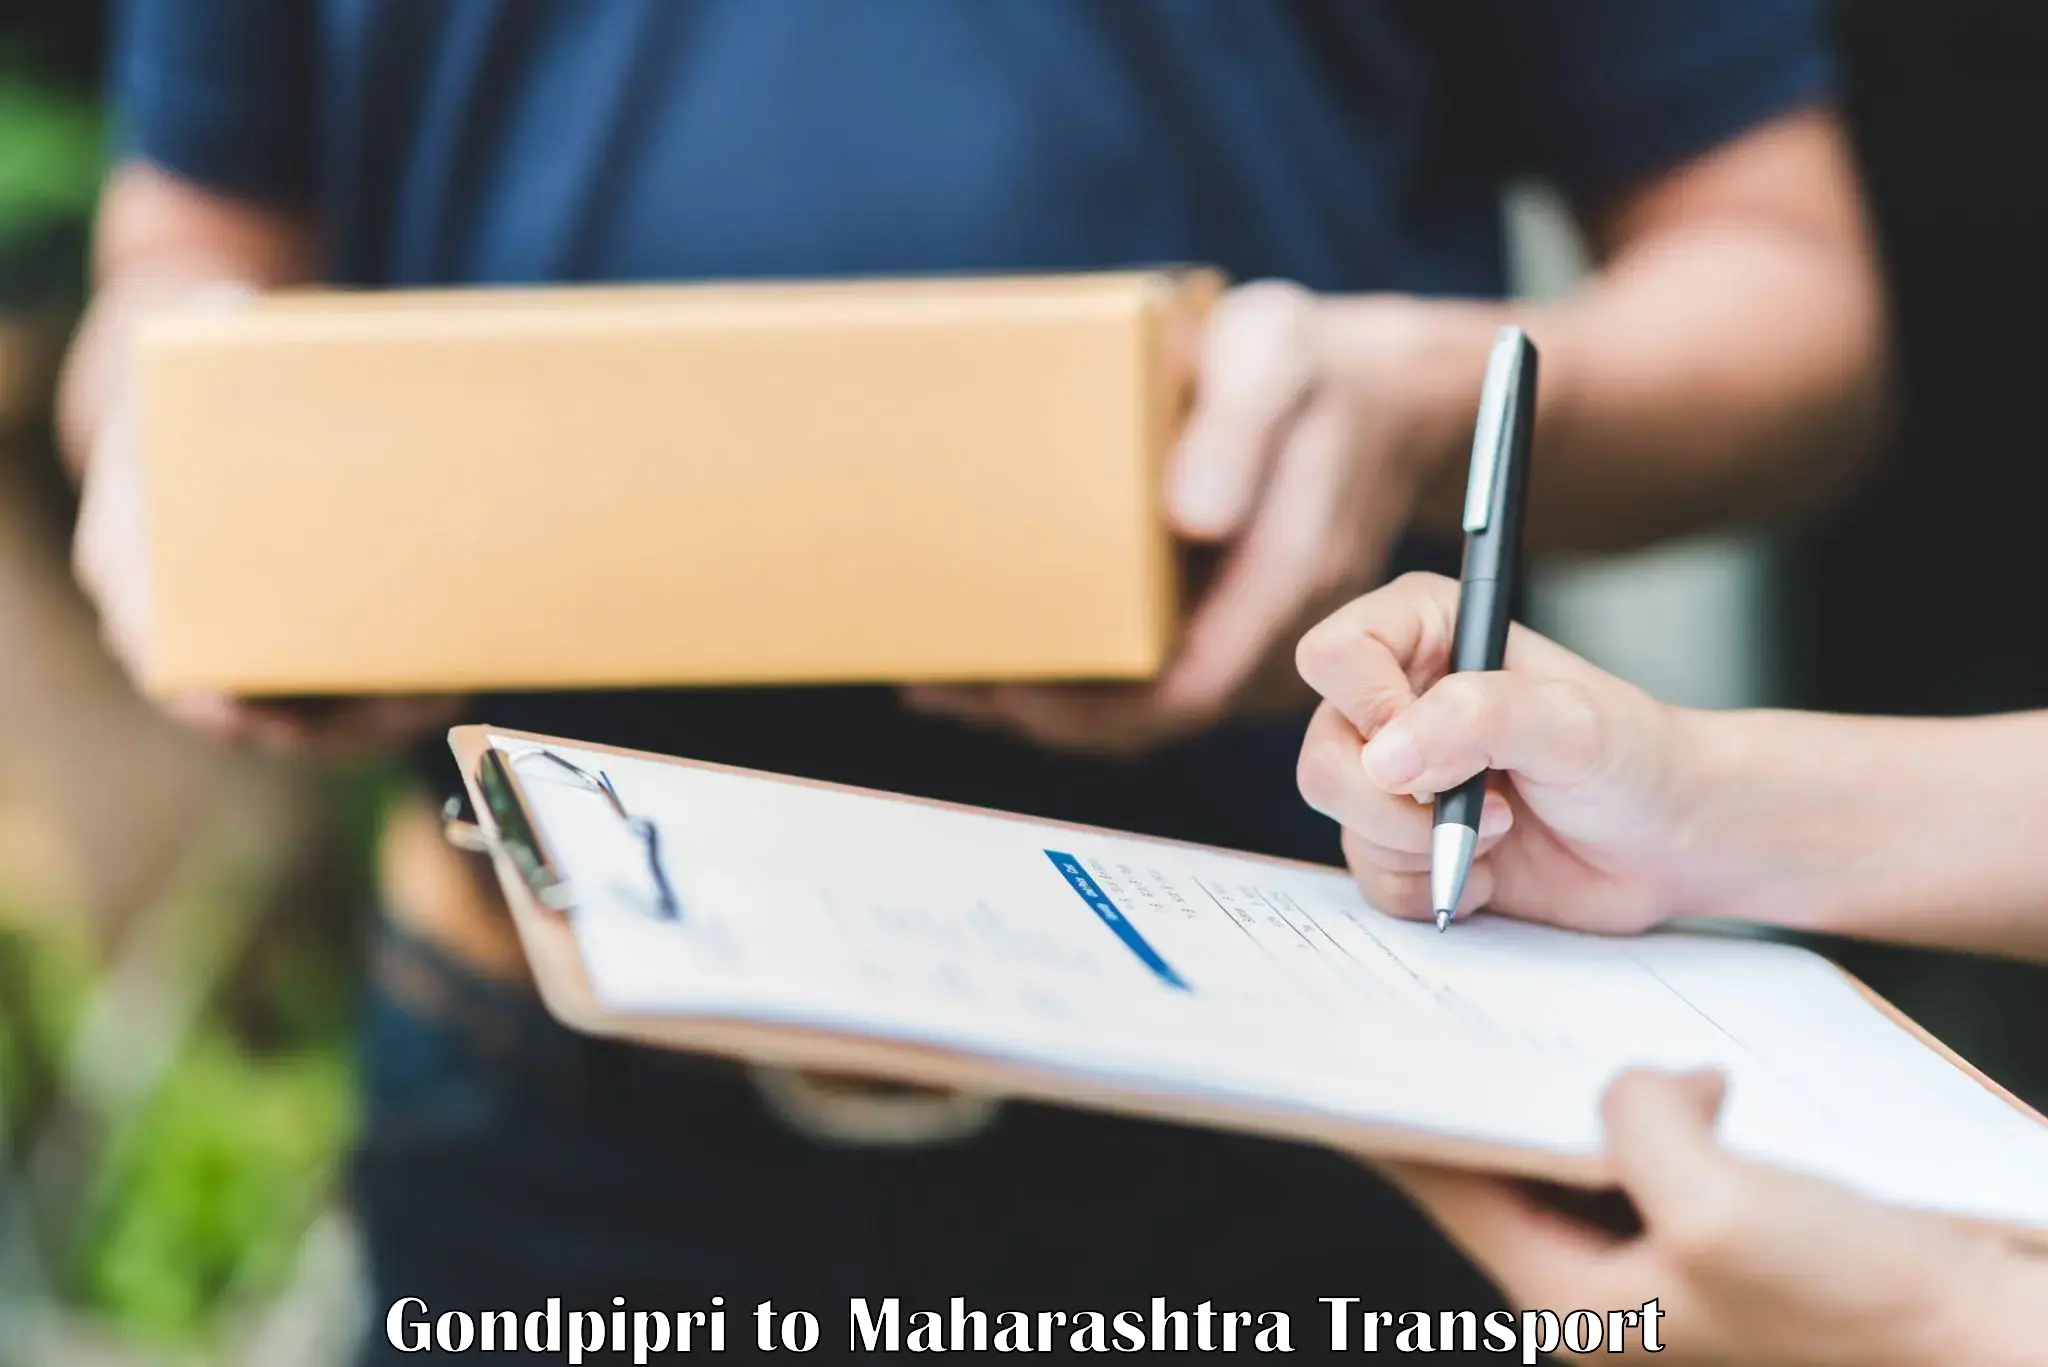 Transport in sharing Gondpipri to Maharashtra